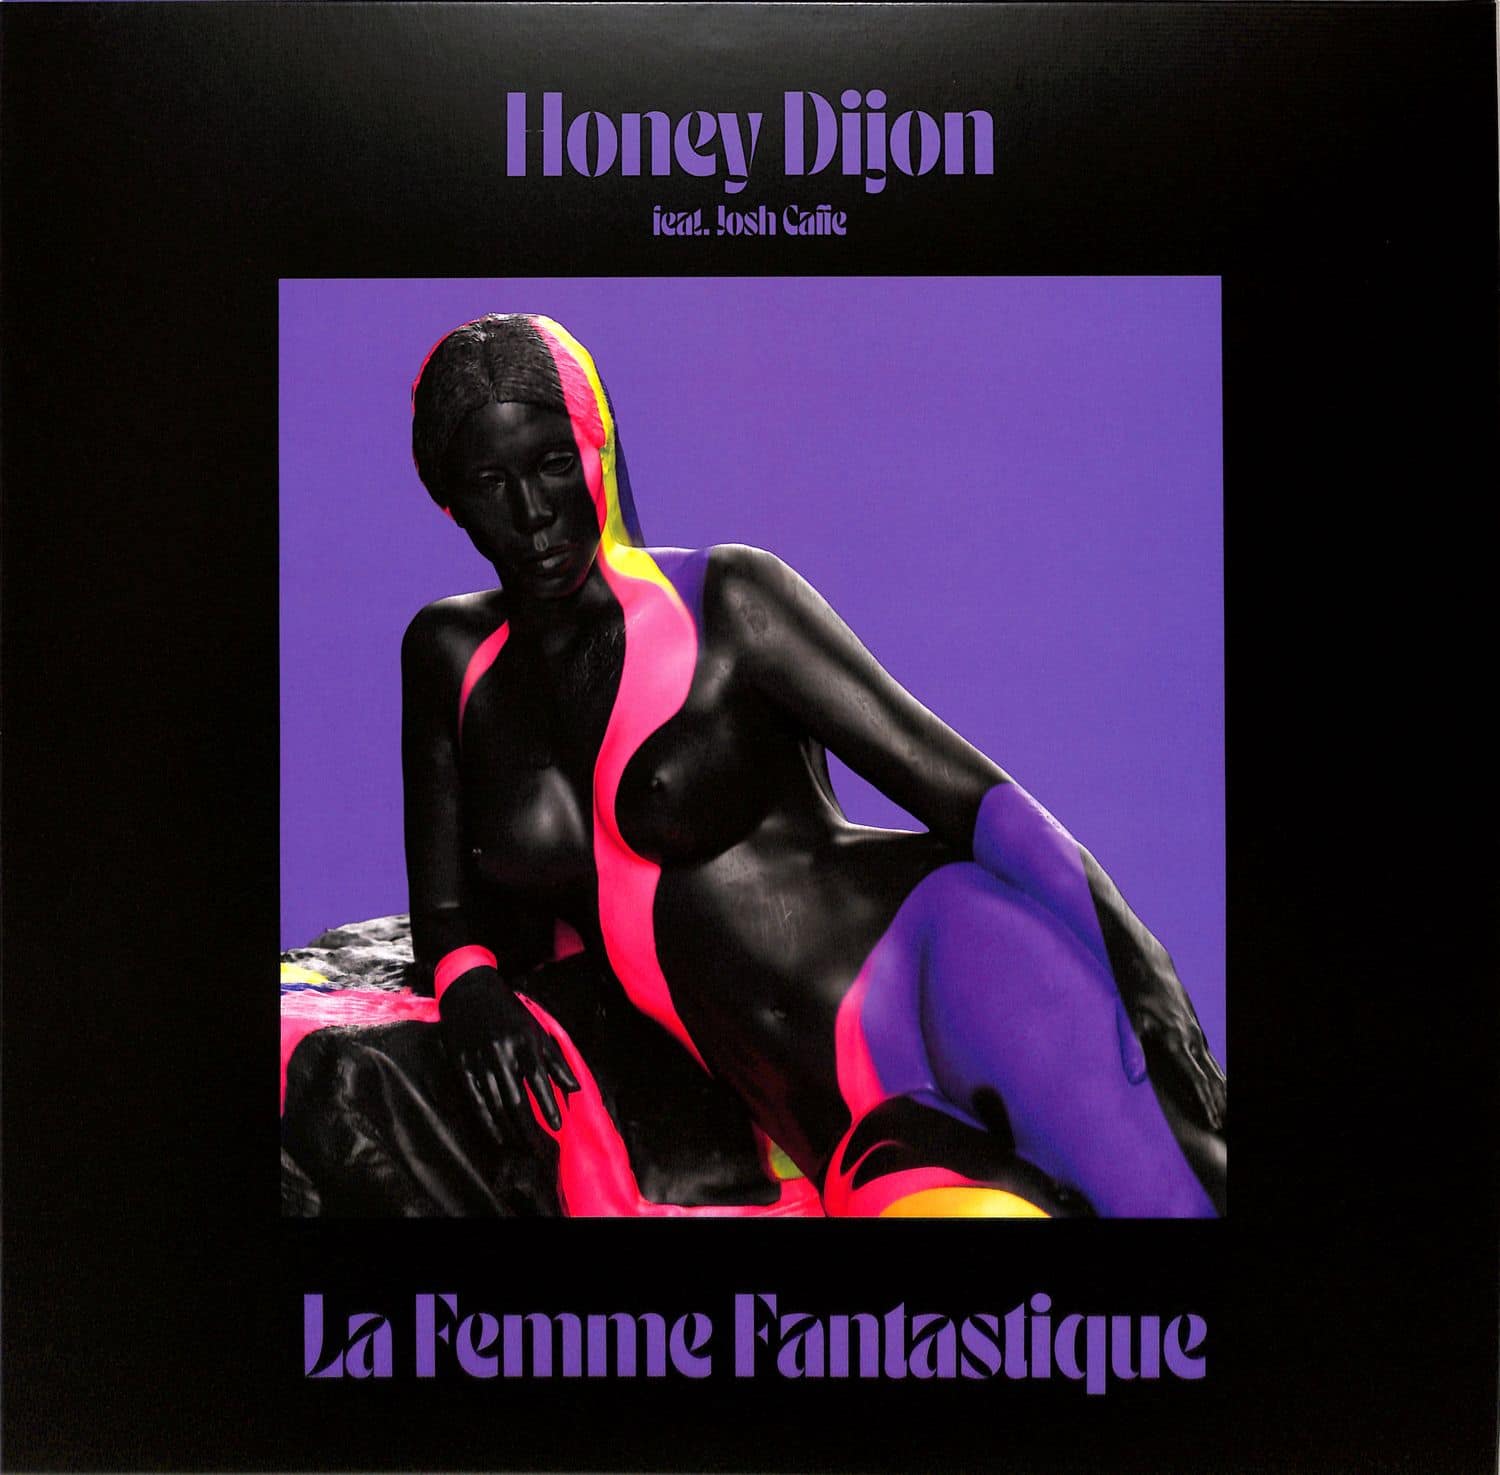 Honey Dijon featuring Josh Caffe - LA FEMME FANTASTIQUE 